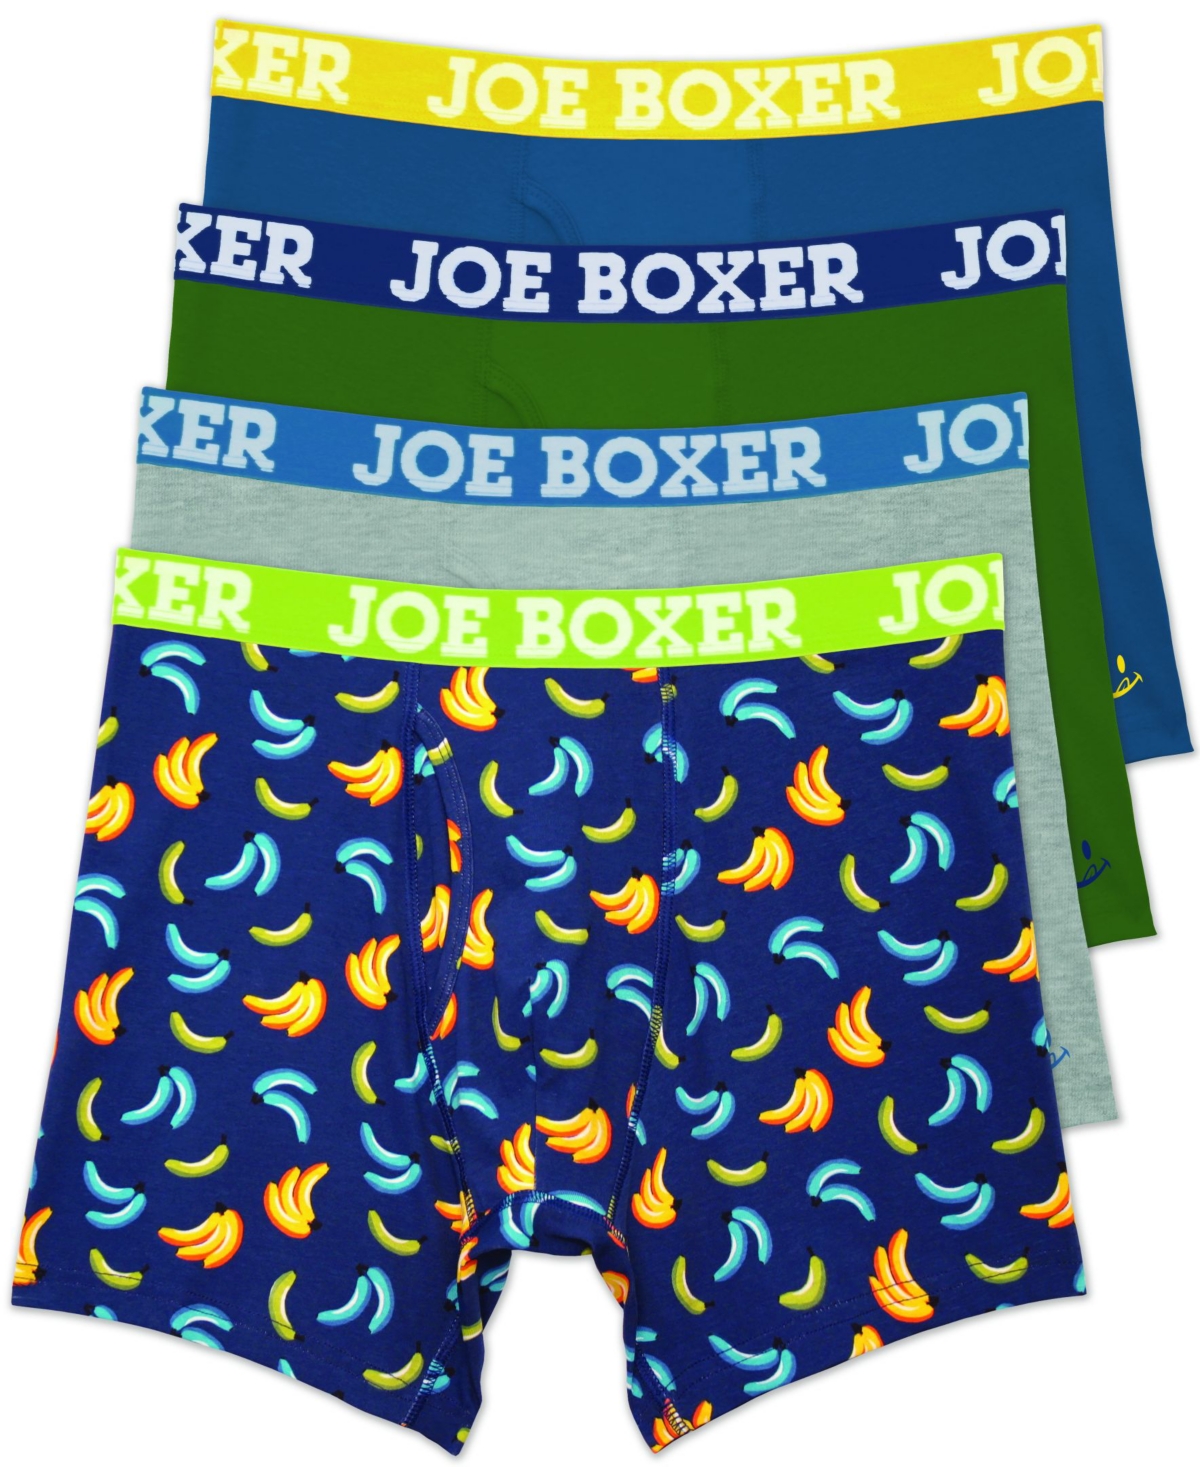 Joe Boxer Men's 4-Piece Fun, Soft and Comfortable Cotton Boxer Briefs Set